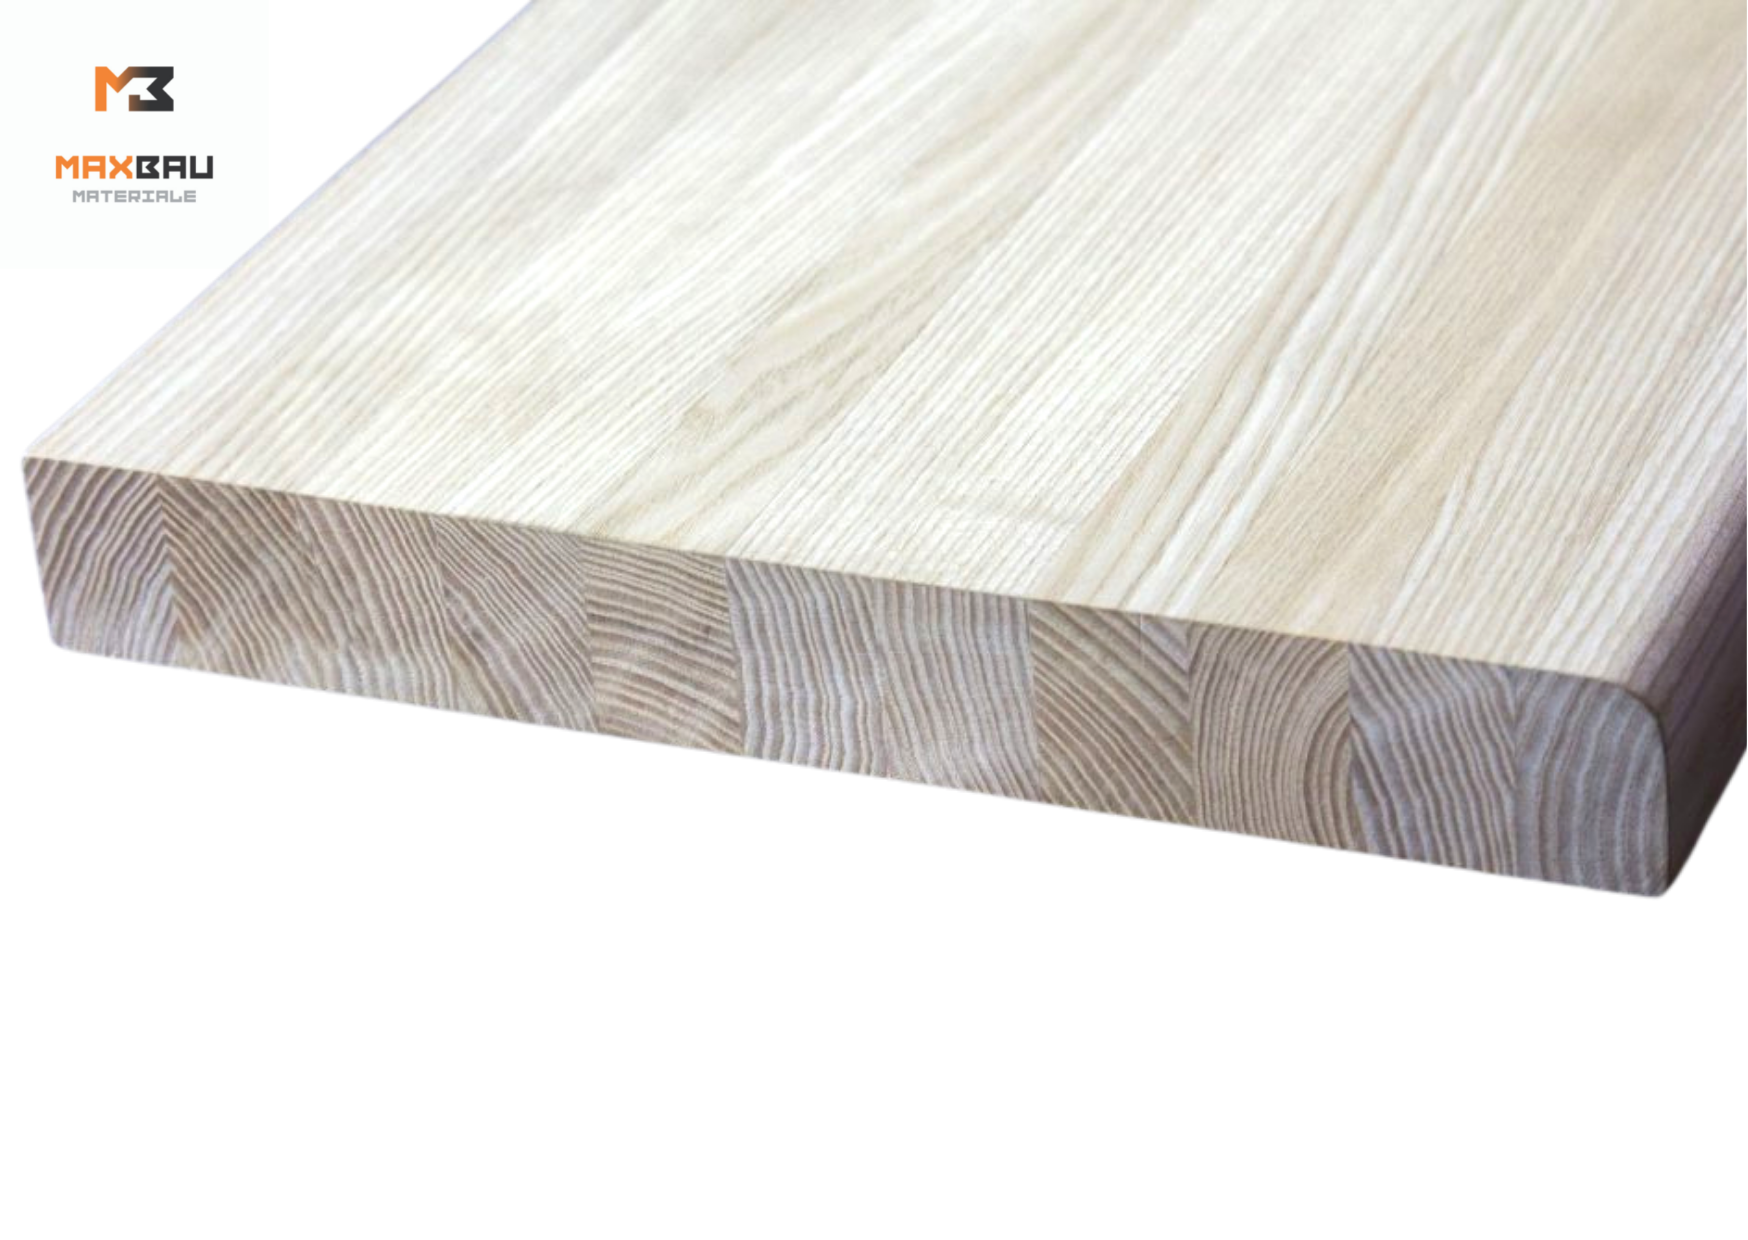 Placi din lemn incleiat - Placa de lemn incleiat MaxBau 2000 x 400 x 28 mm Clasa AB, https:maxbau.ro